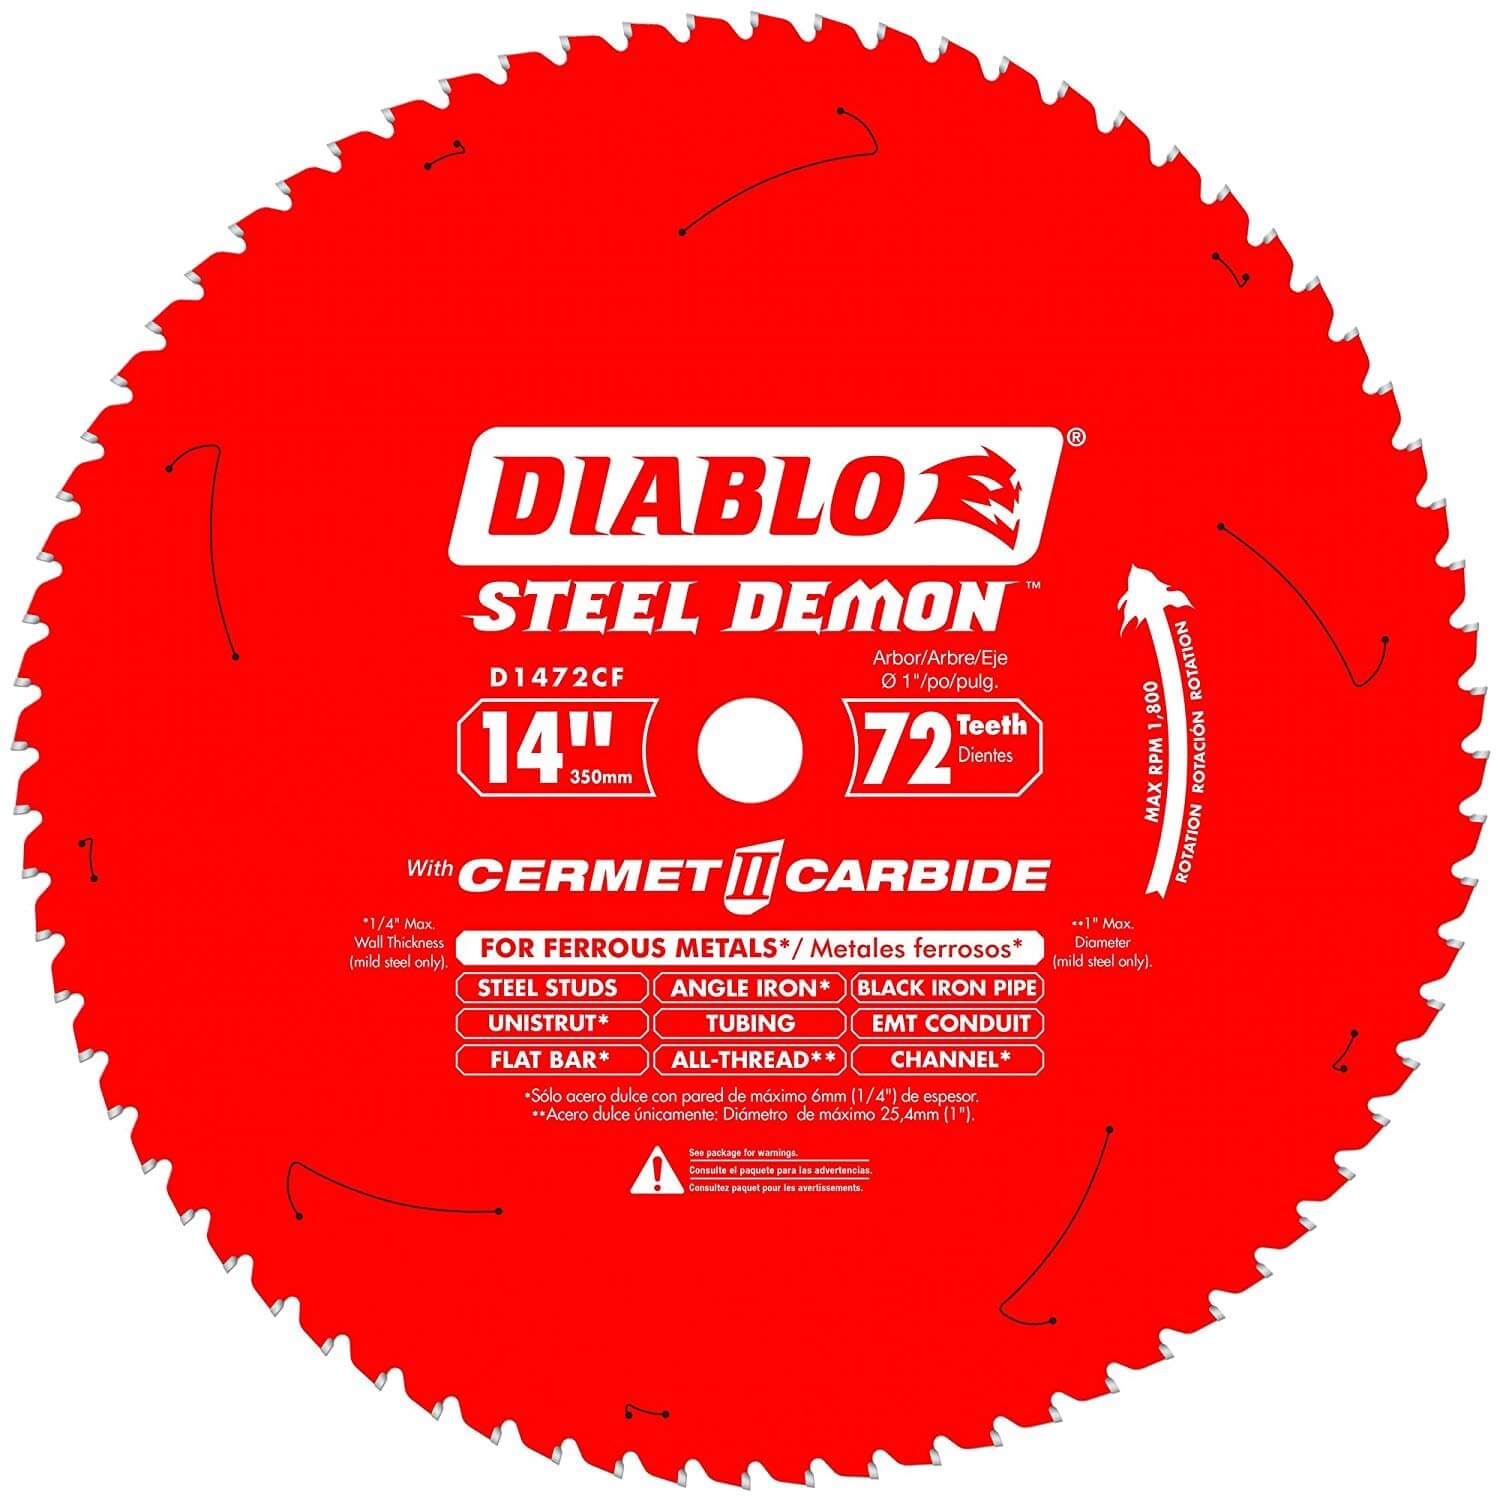 Diablo D1472CF 14-inch Steel Demon 72T Cermet II Carbide Ferrous Metal Saw Blade - wise-line-tools